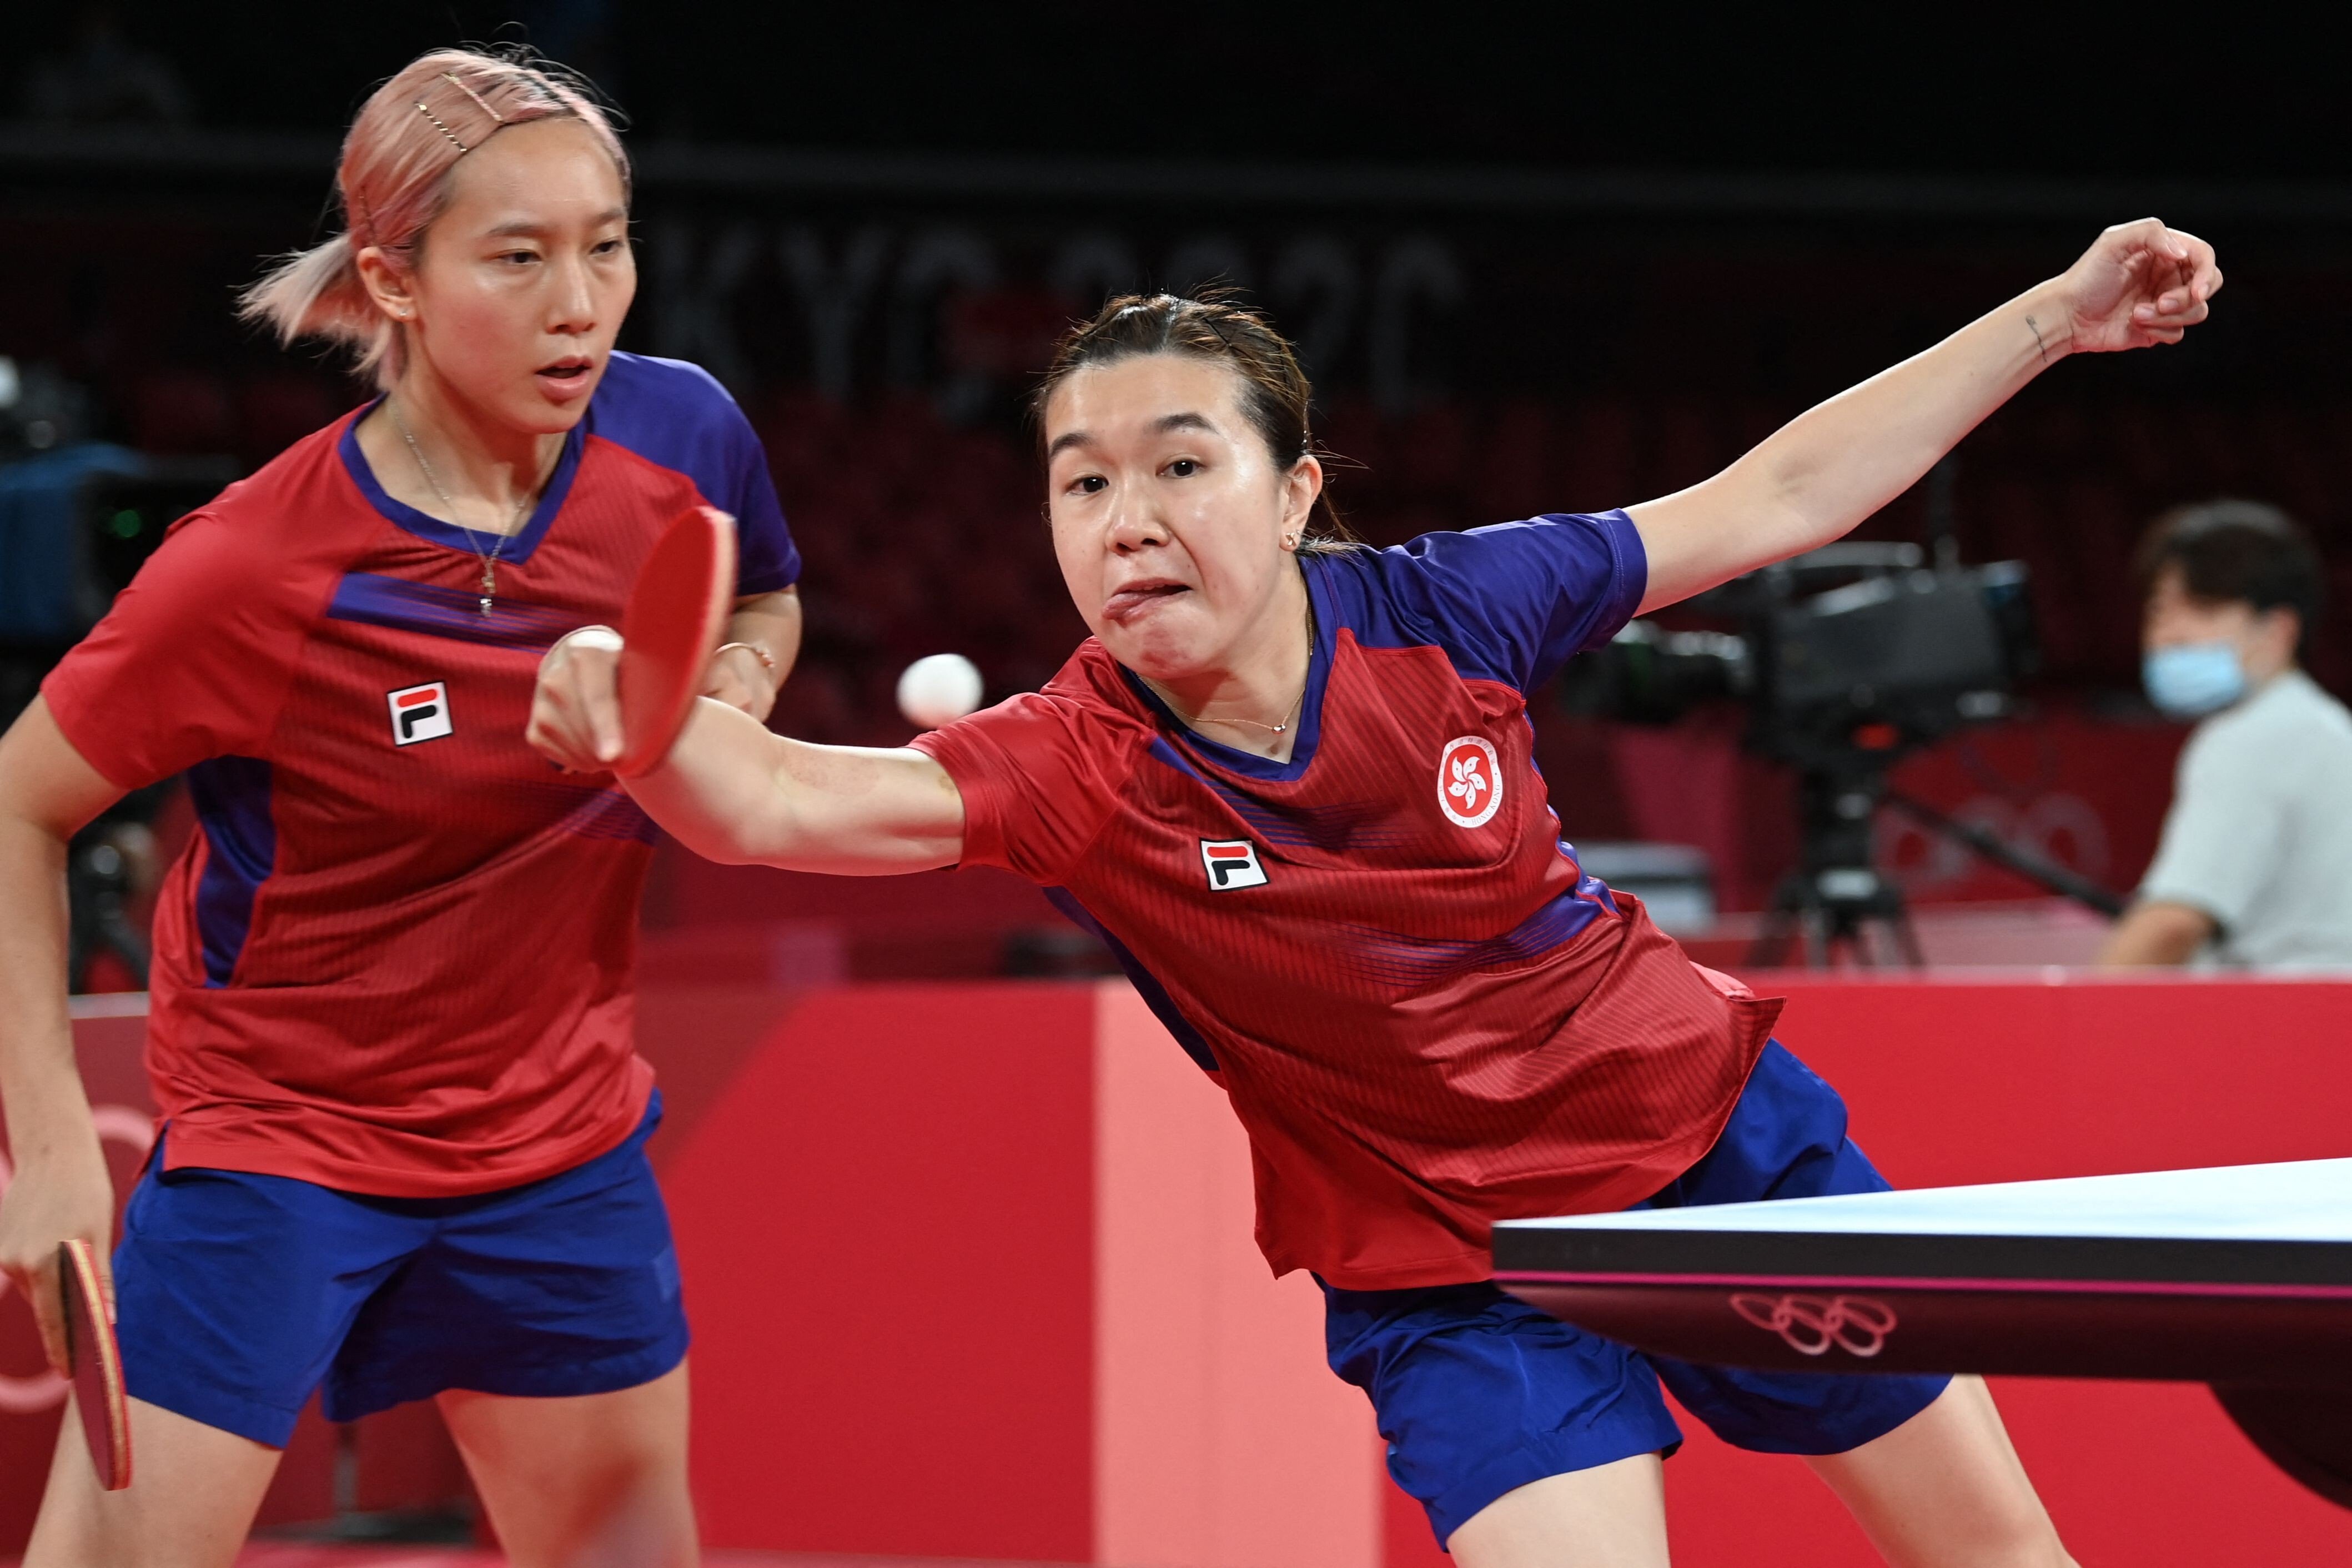 In the women’s table tennis team semi-final, Hong Kong's Minnie Soo Wai-yam (left) and Lee Ho-ching lose 0–3 to Japan’s Kasumi Ishikawa and Miu Hirano. Photo: AFP